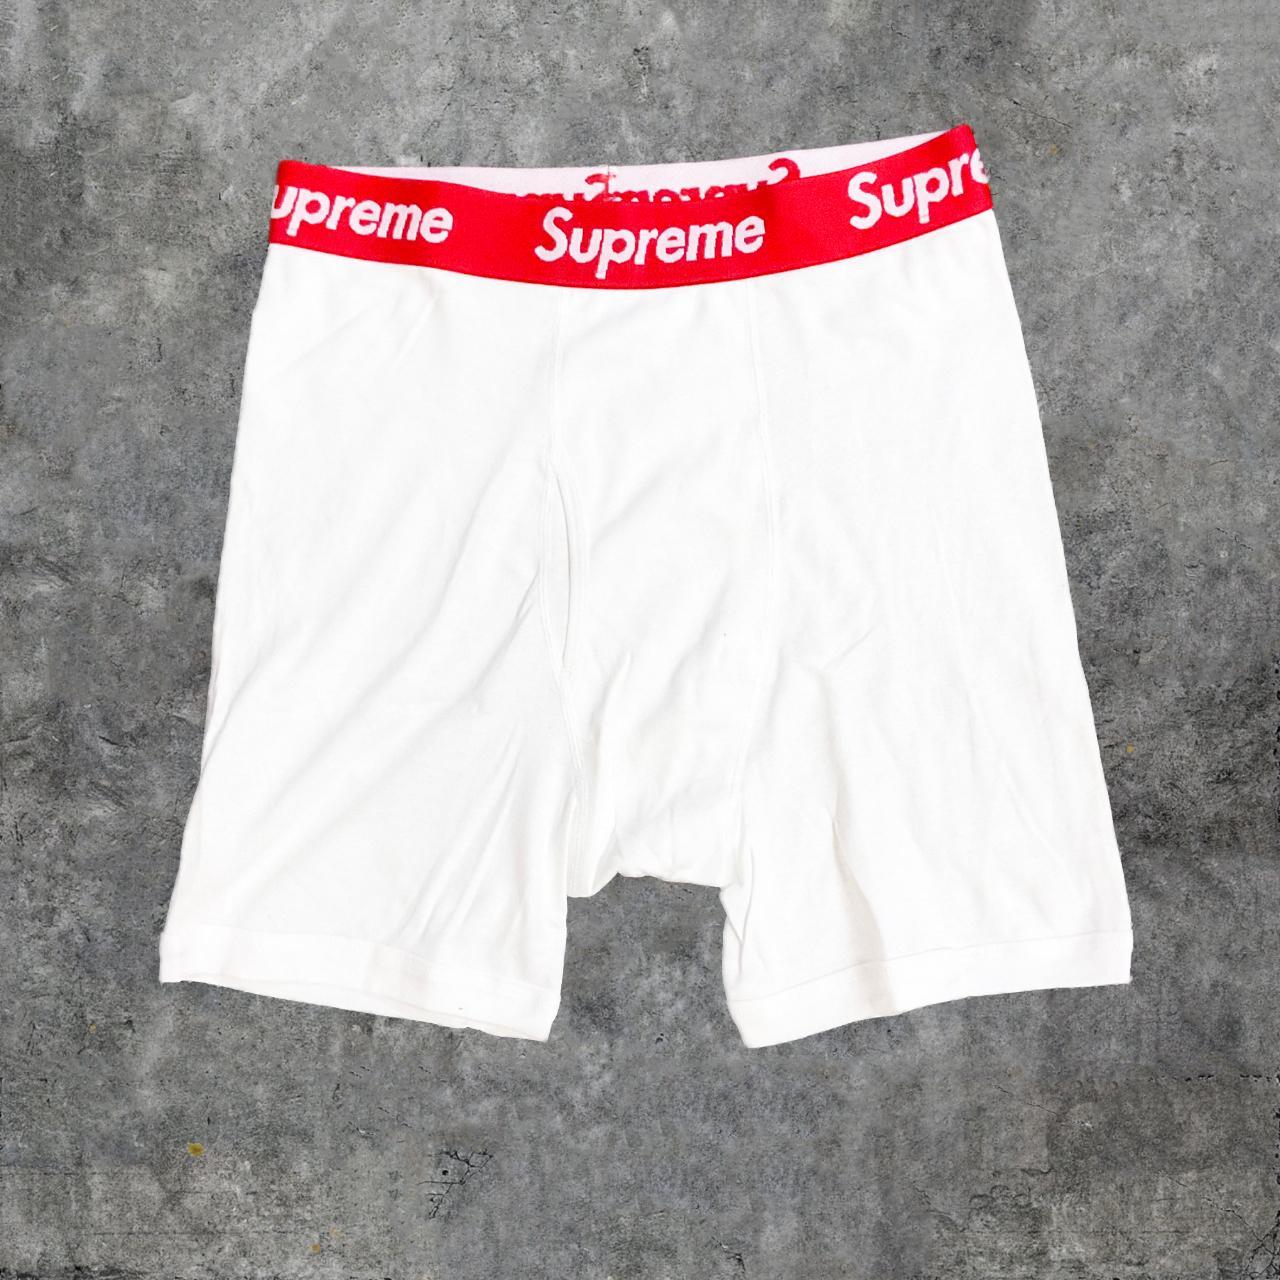 Qoo10 - Supreme Underwear : Lingerie & Sleepwear